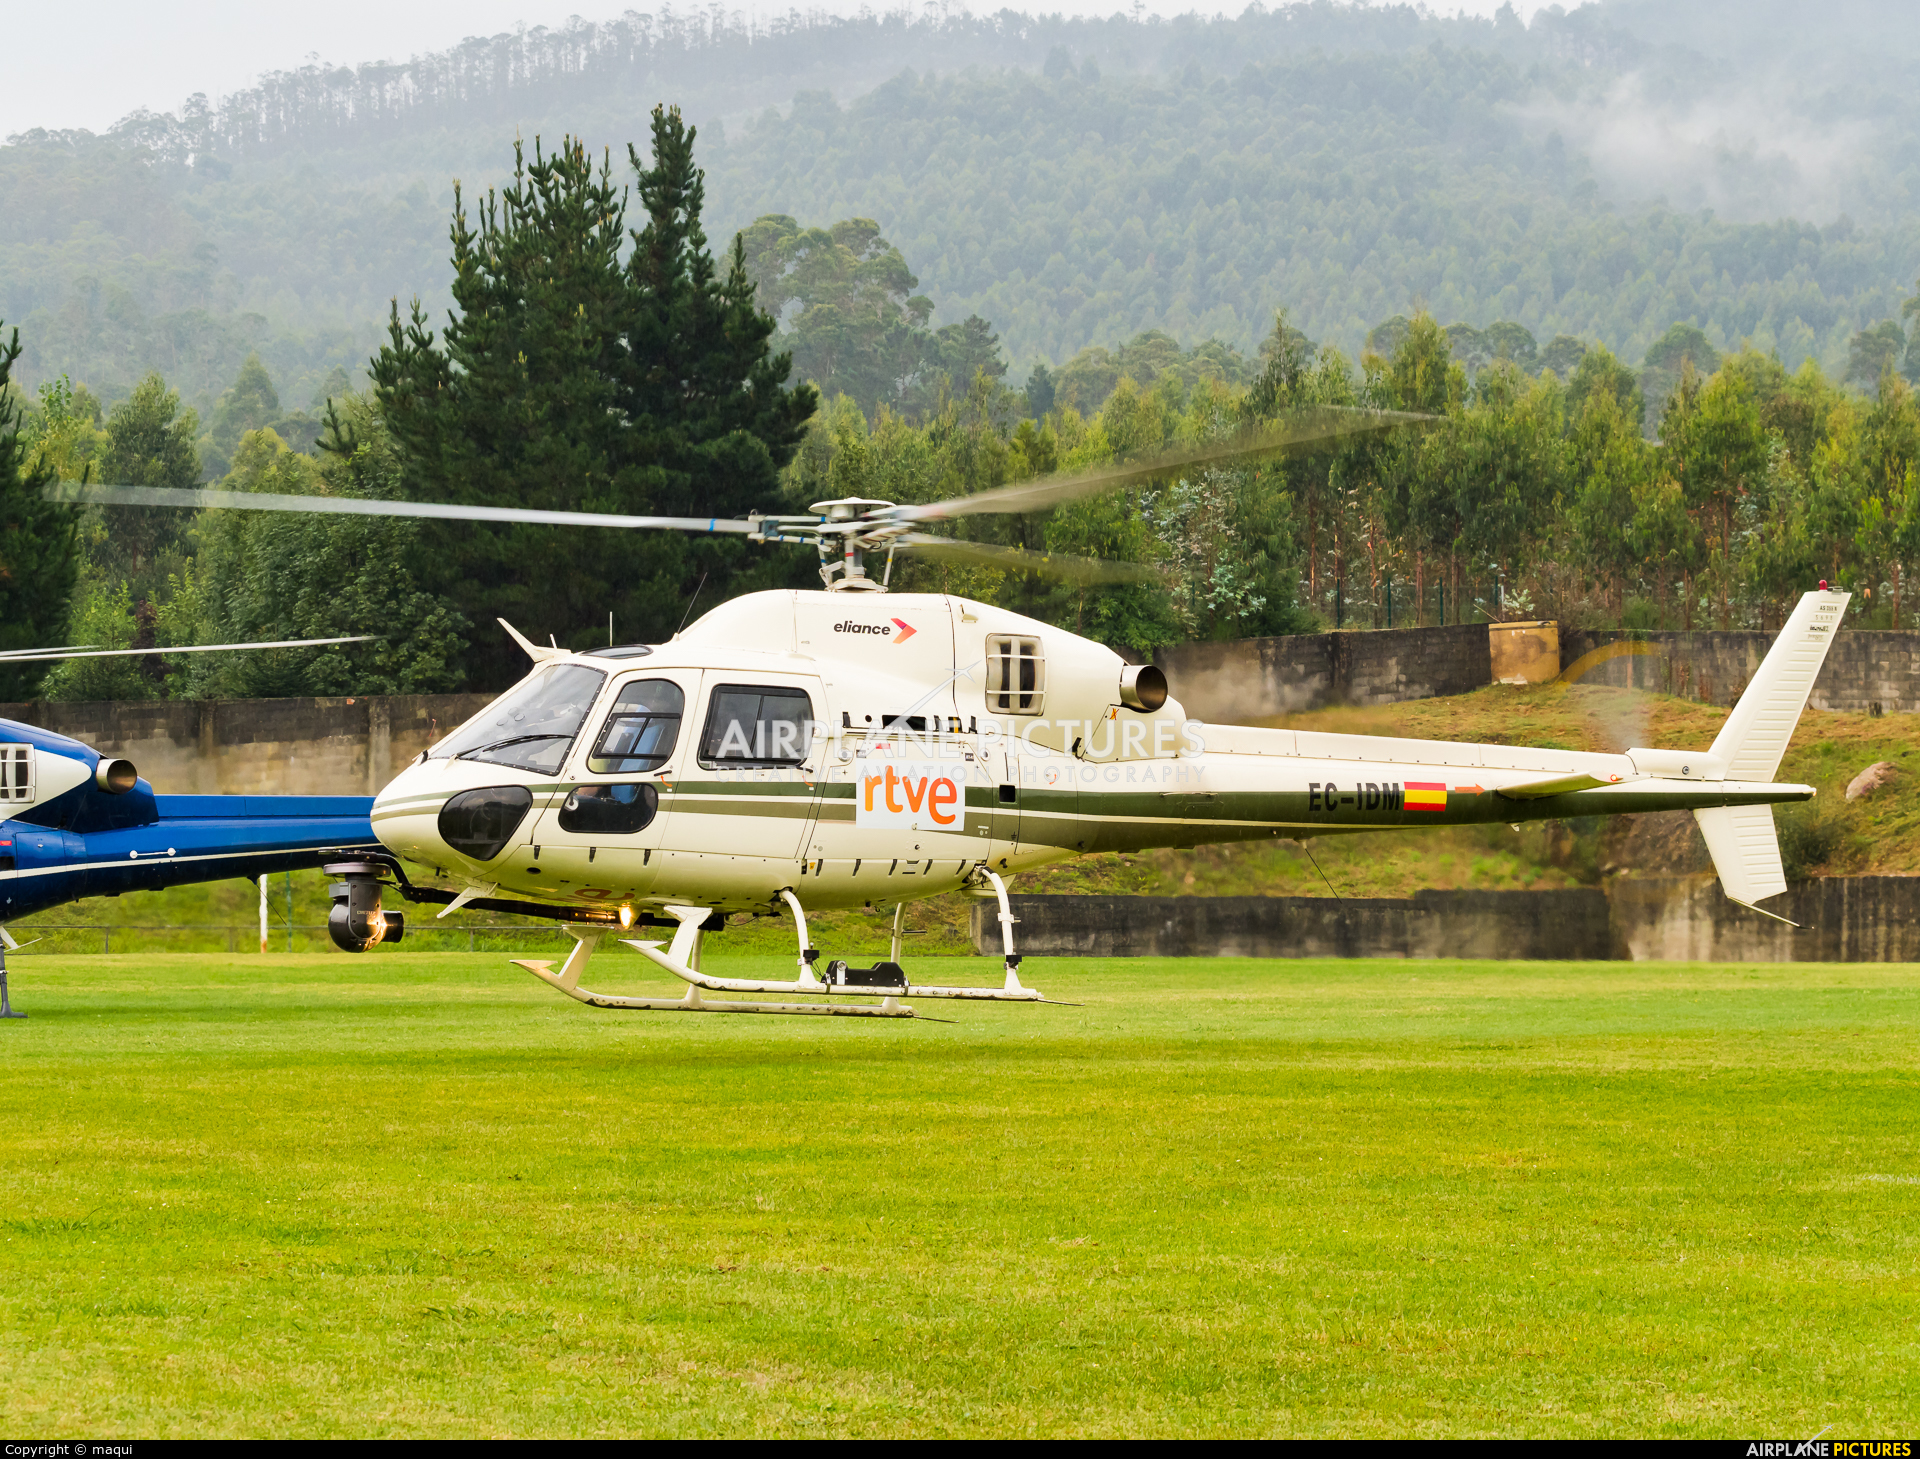 Eliance - Habock Aviation Group EC-IDM aircraft at Lugo - Off Airport